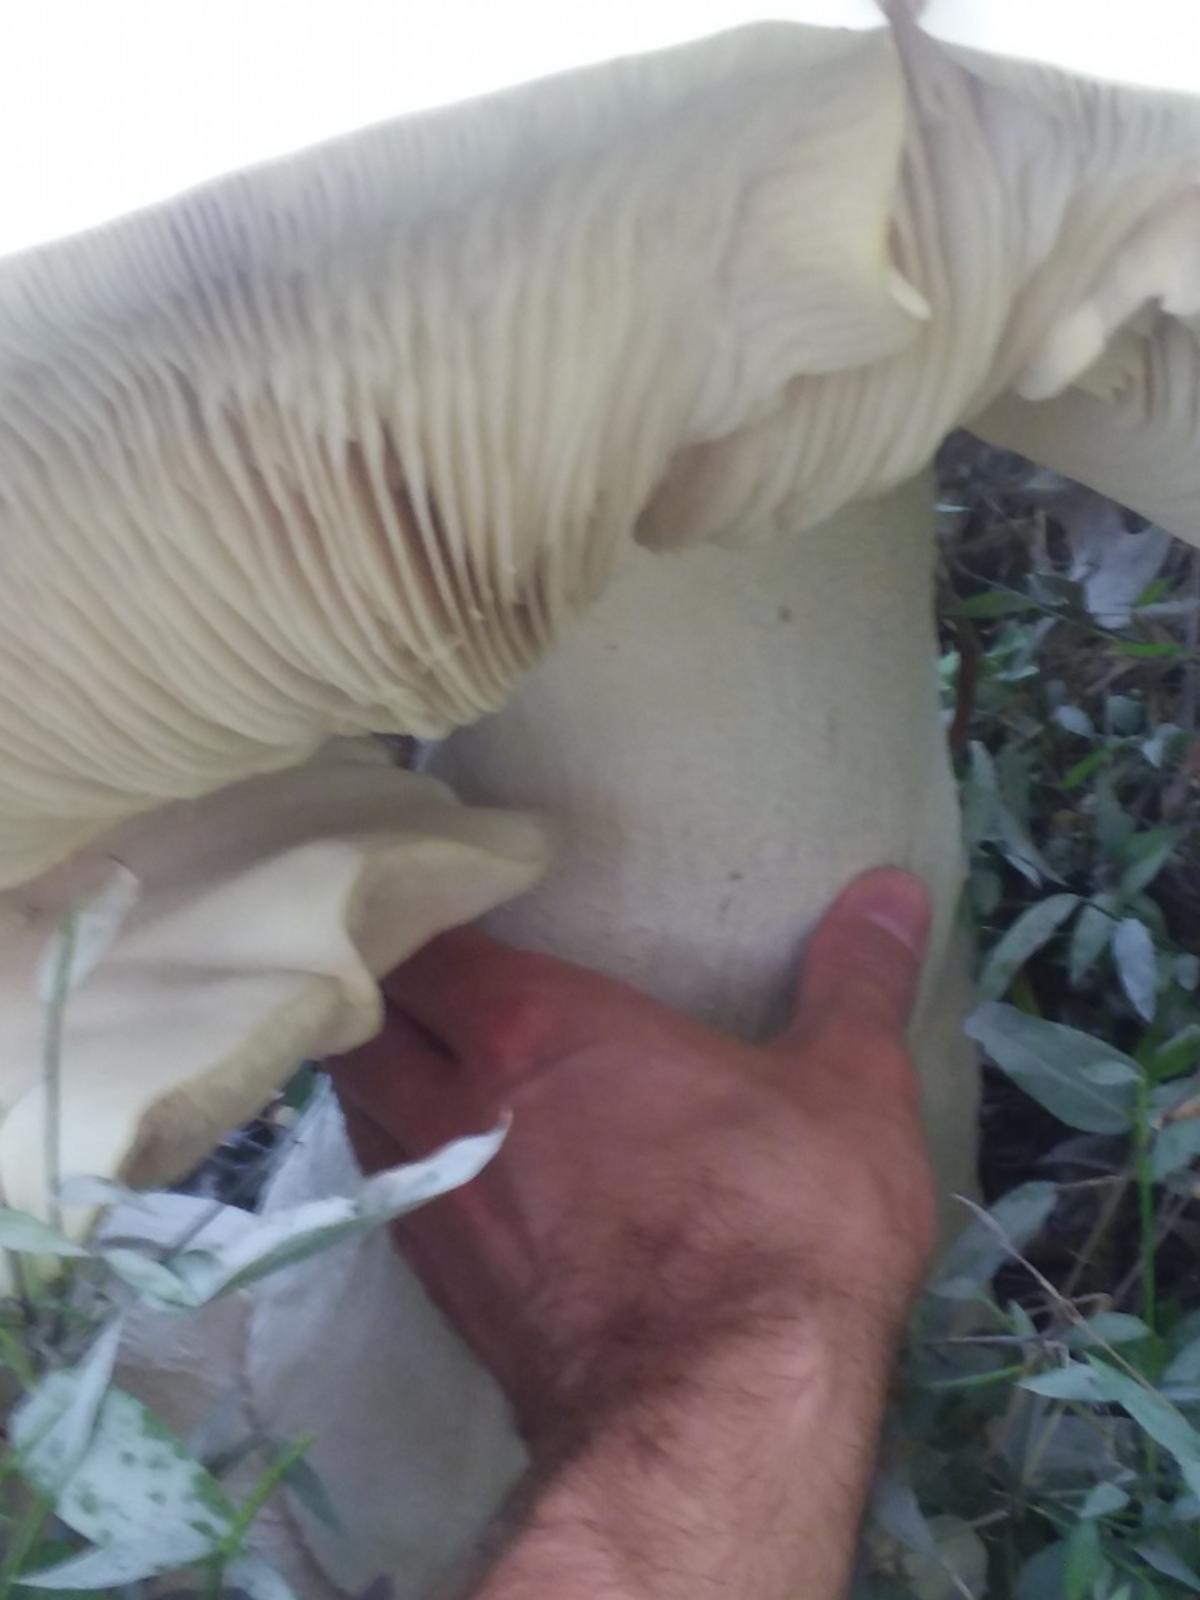 giant head american titan fungus